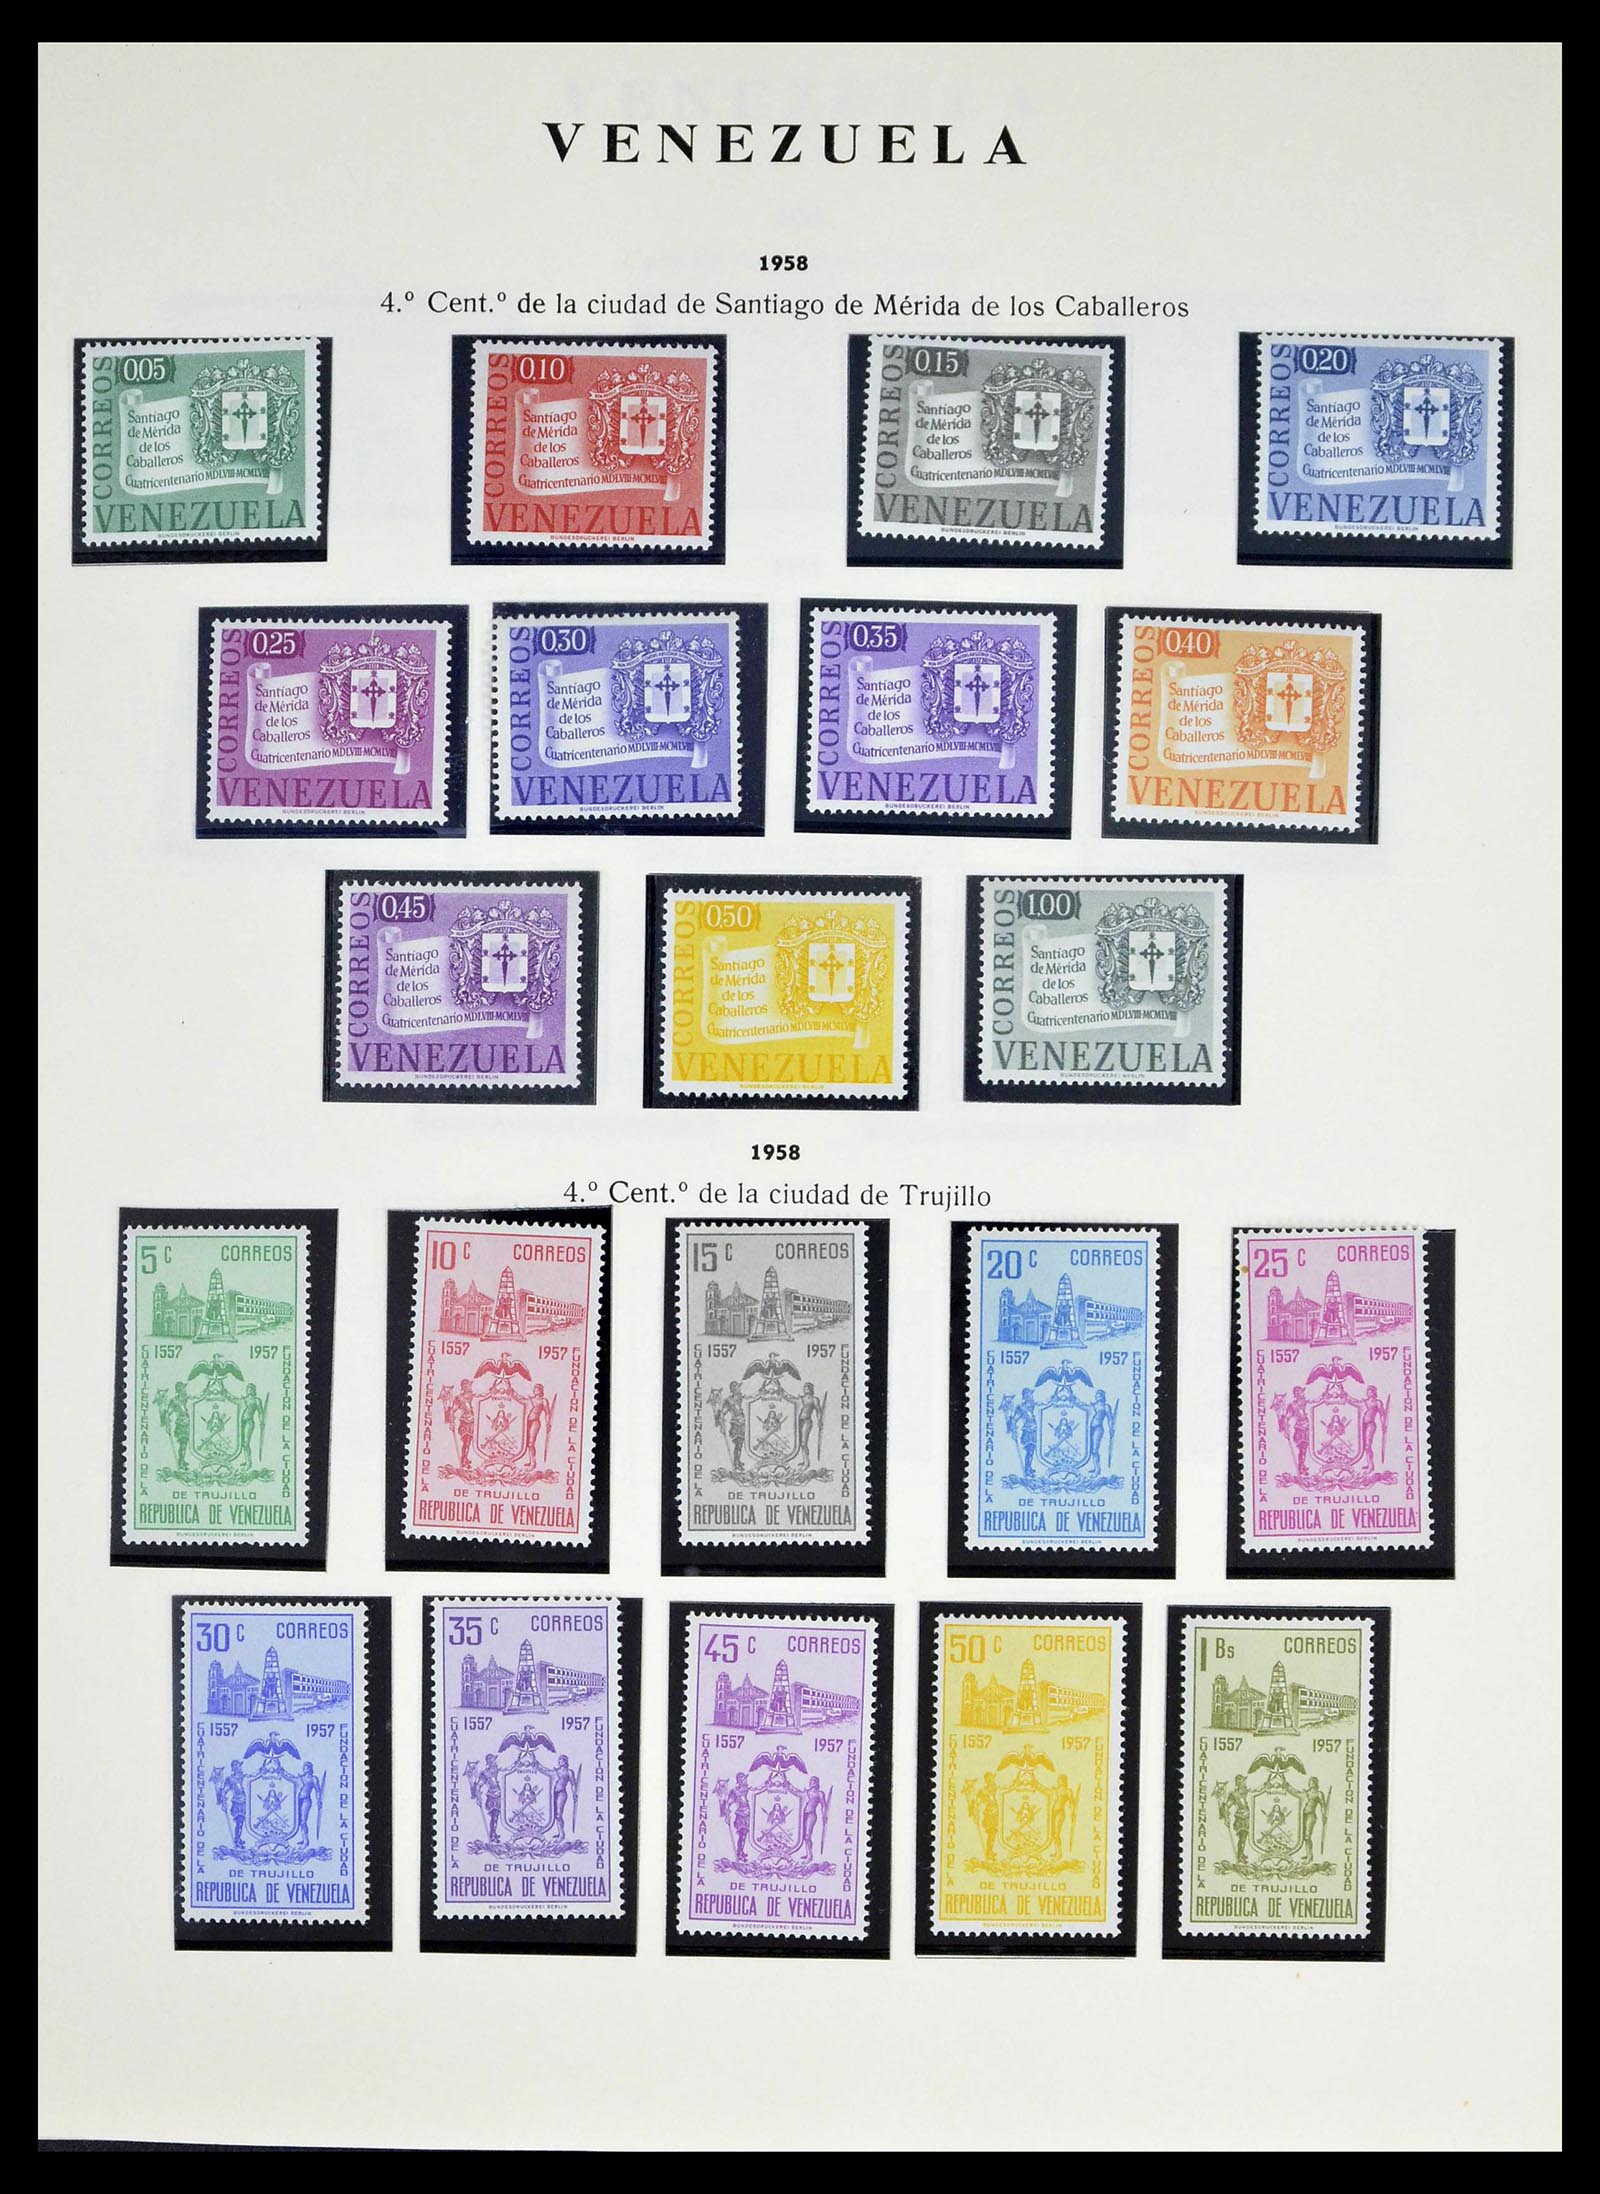 39223 0040 - Stamp collection 39223 Venezuela 1859-1984.